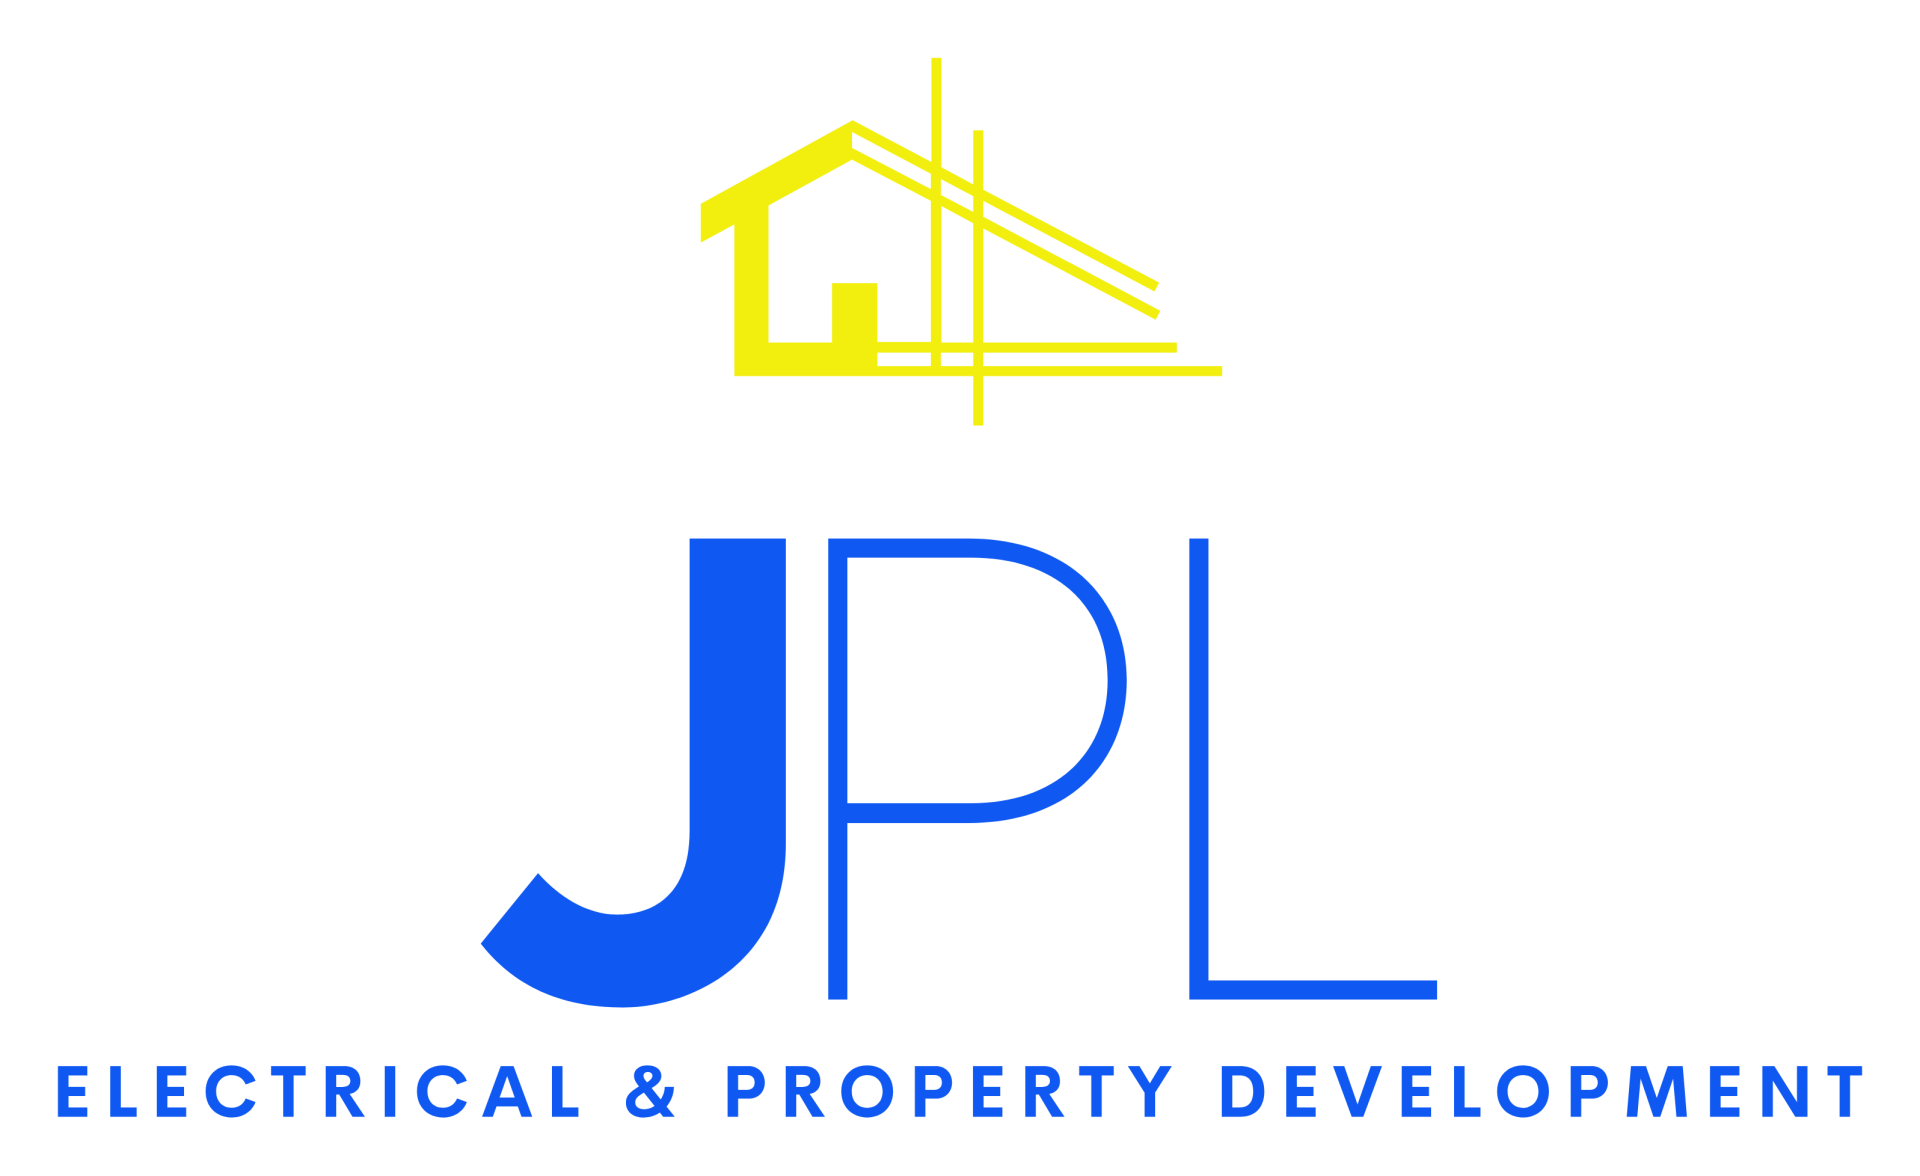 JPL Electrical & Property Development